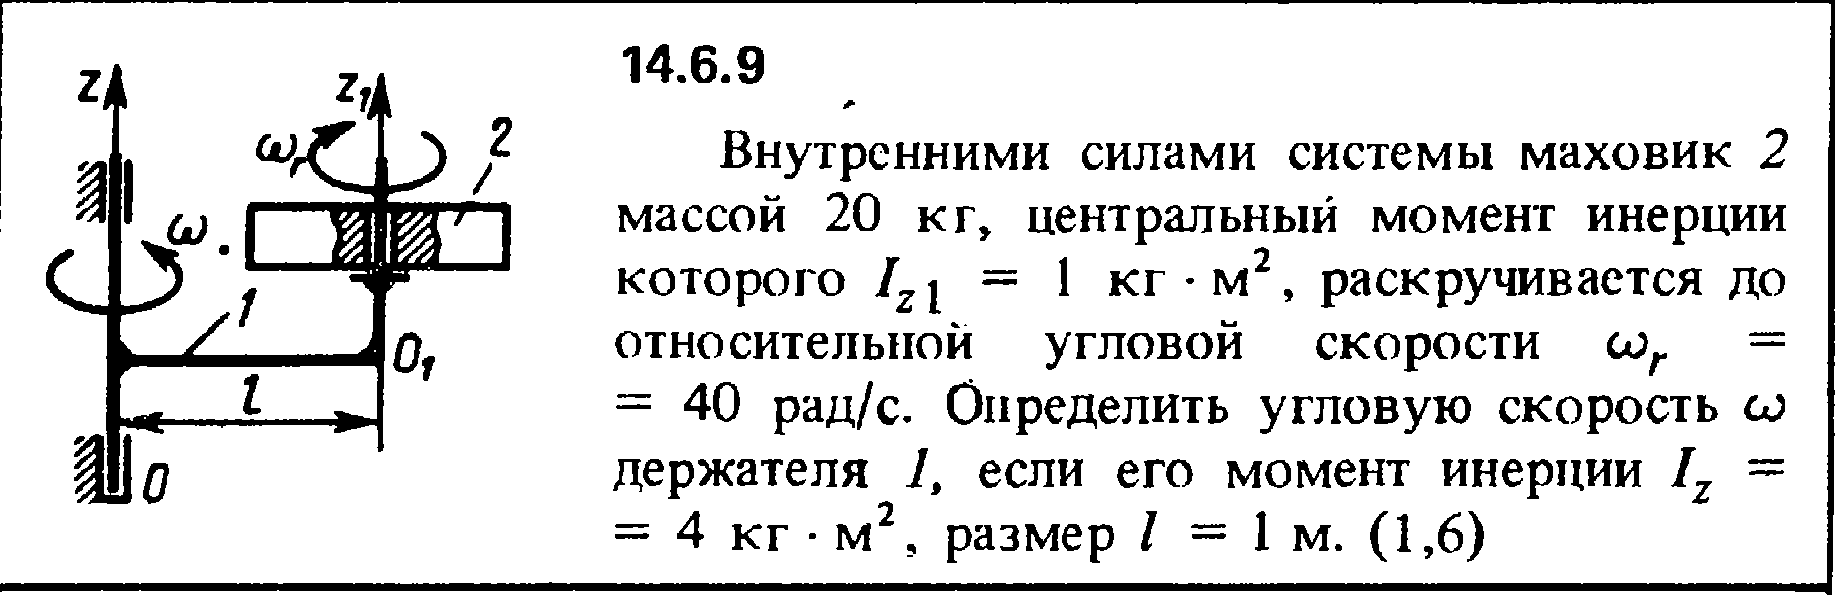 Решение задачи 14.6.9 из сборника Кепе О.Е. 1989 года